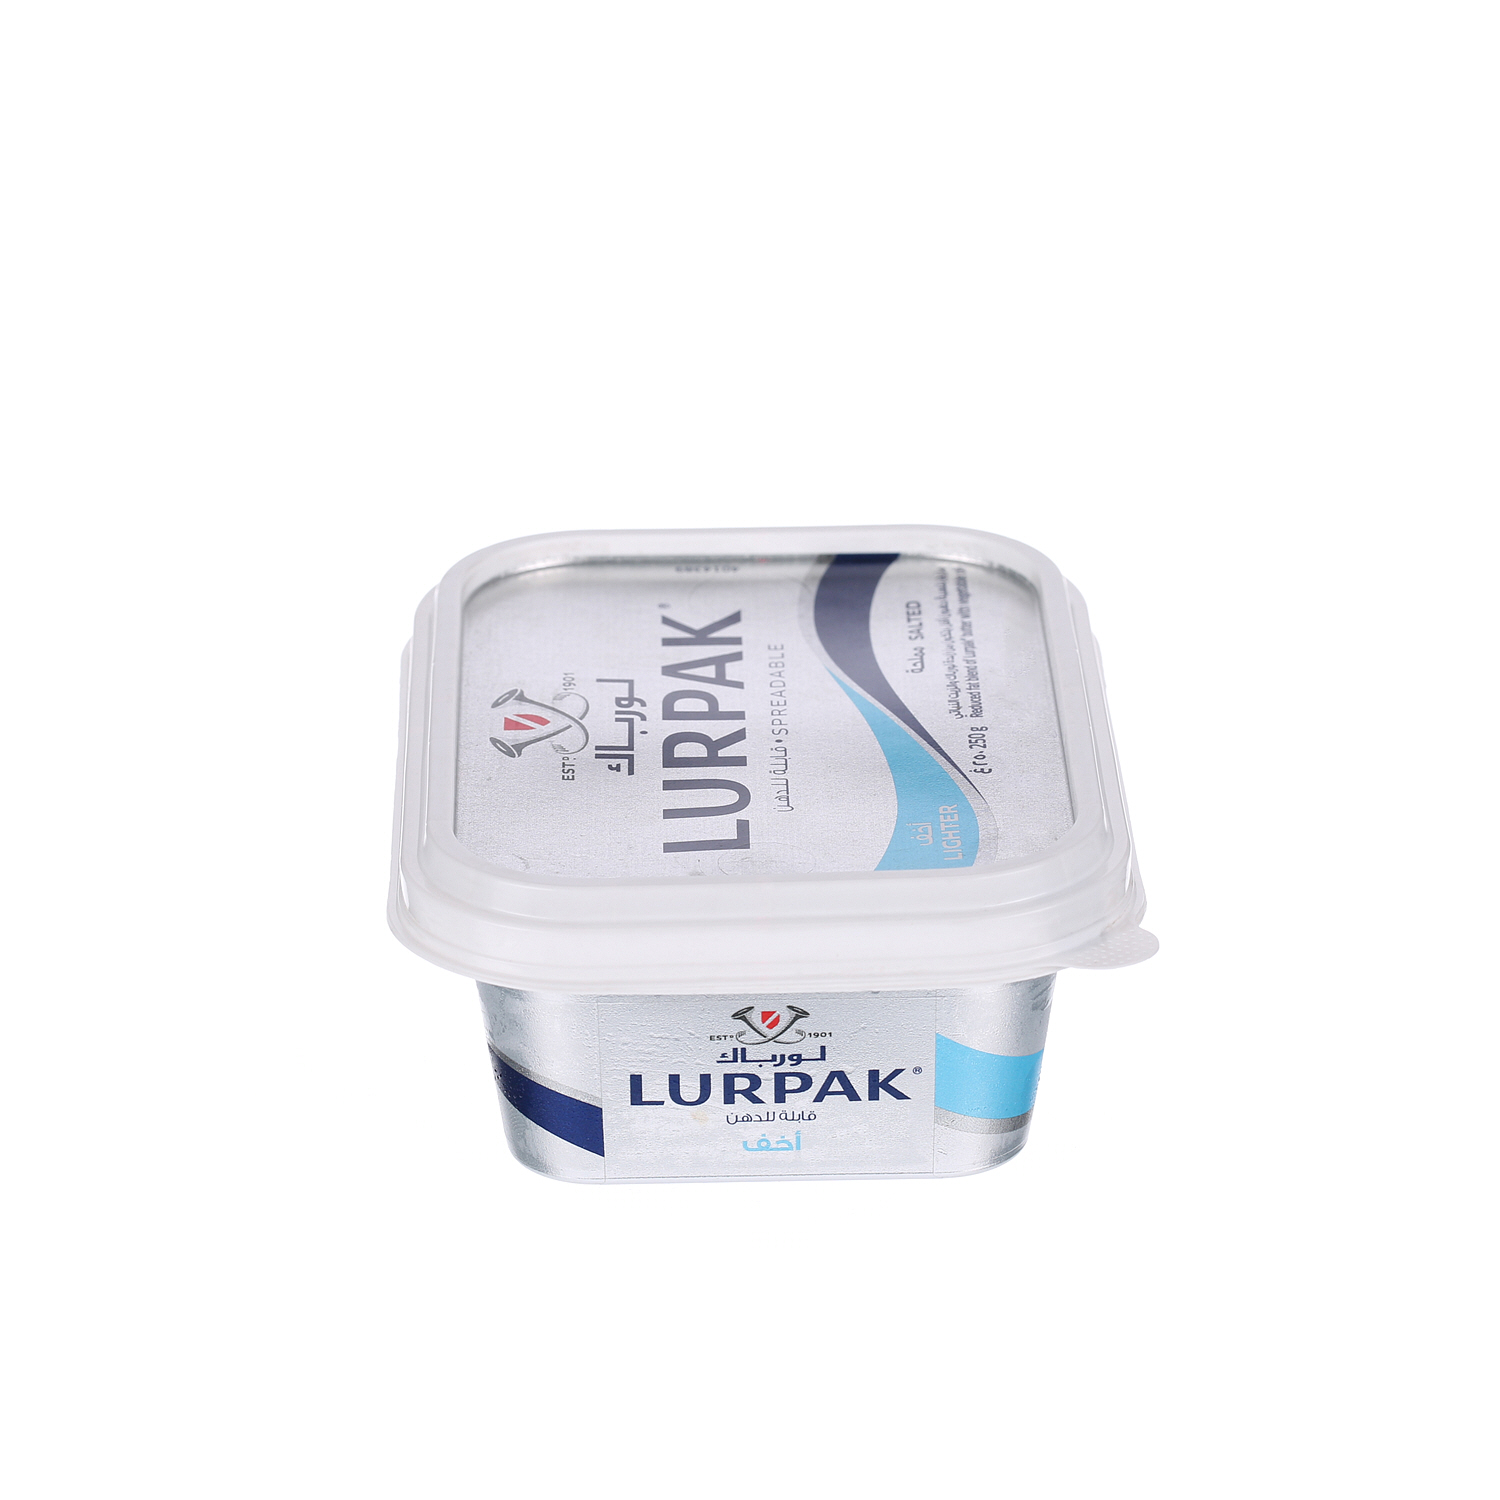 Lurpak Butter Spreadable Light Salted 250 g